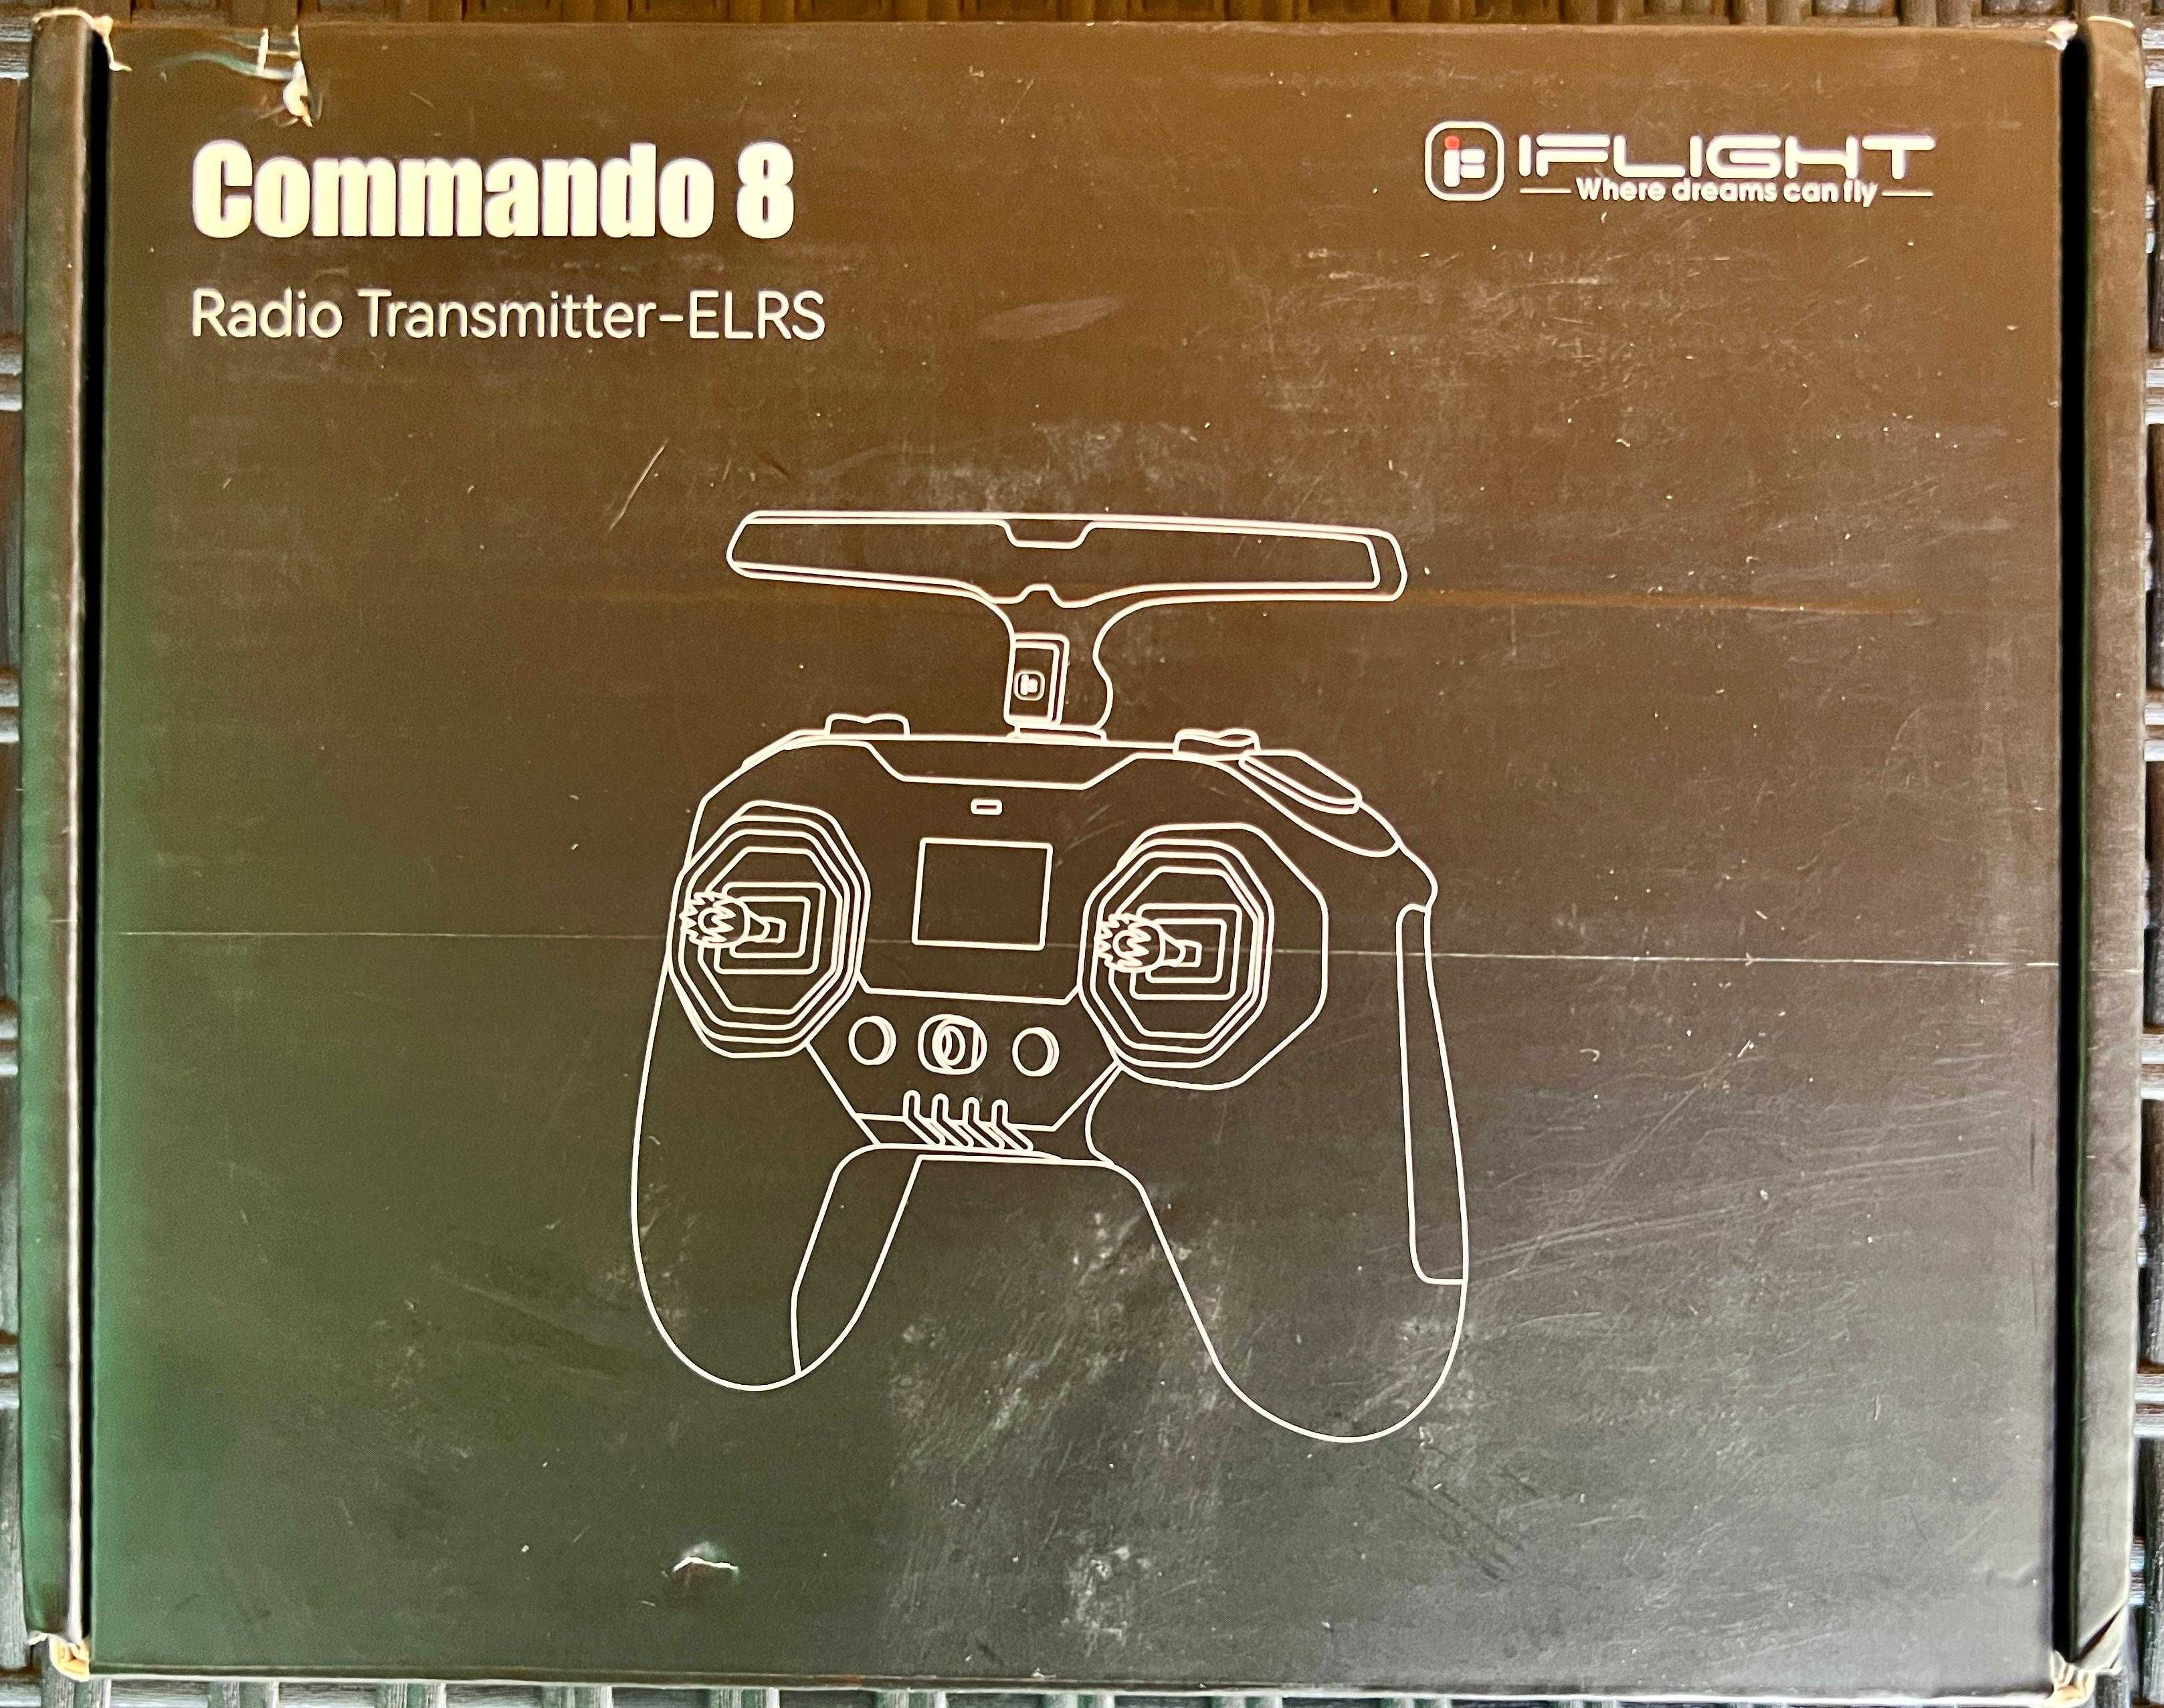 iFlight Commando 8 - Radio Transmitter - ELRS 2.4 GHz